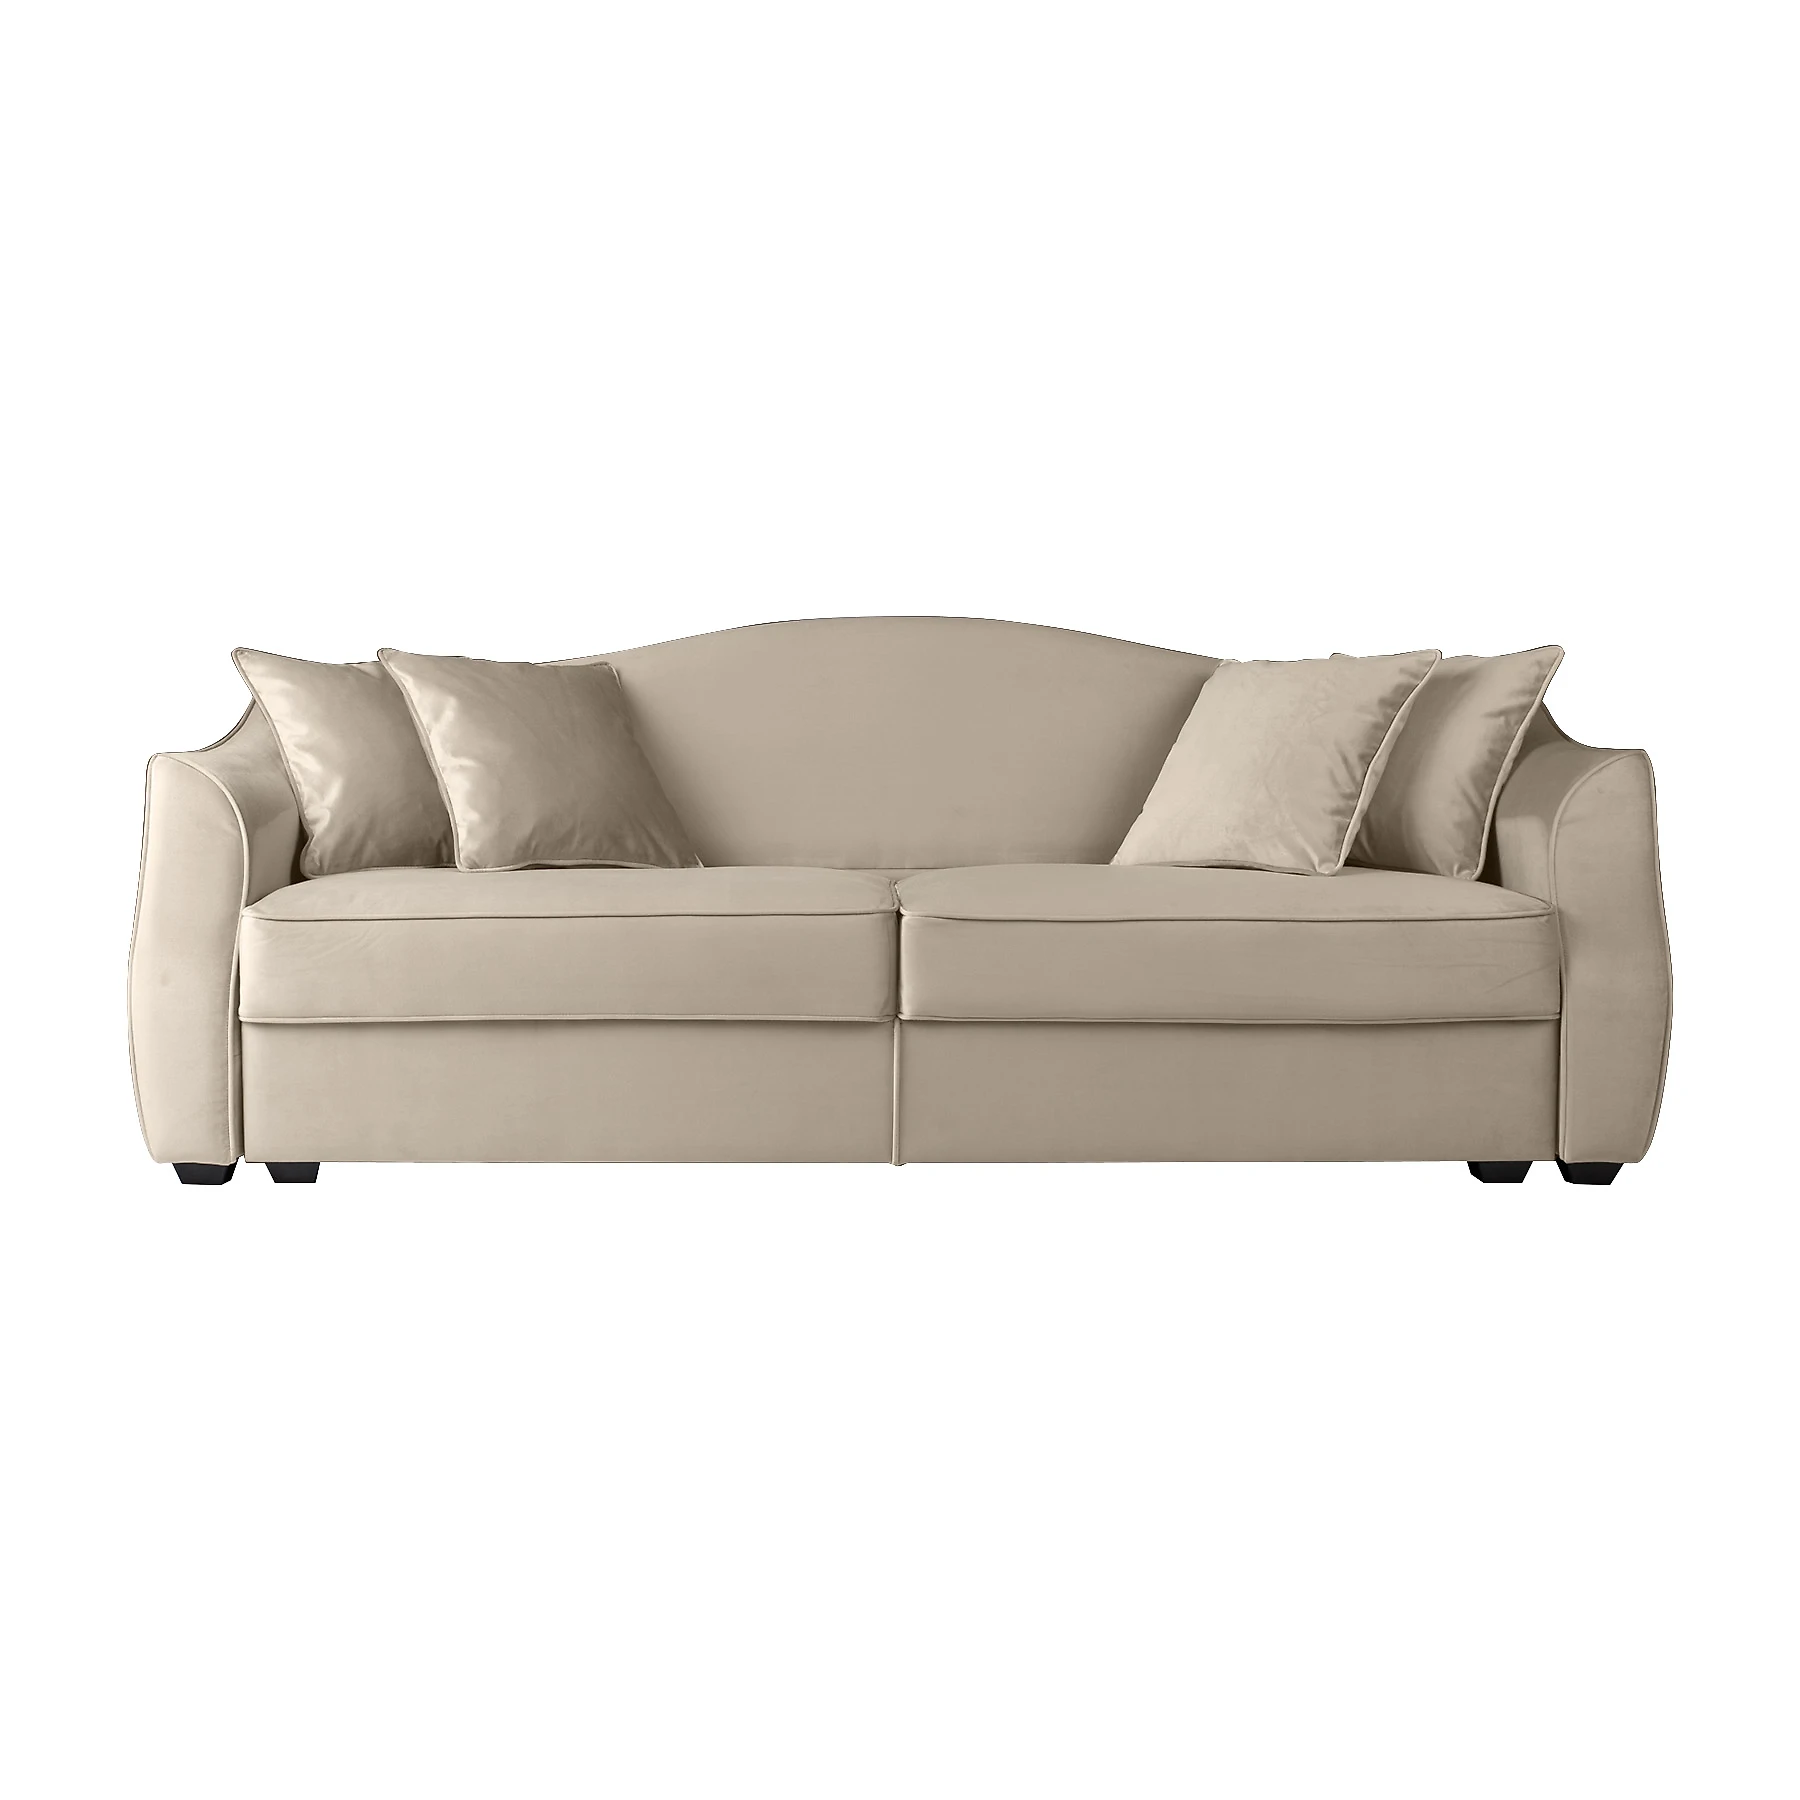 Белый прямой диван Hermes-B 0124,1,2